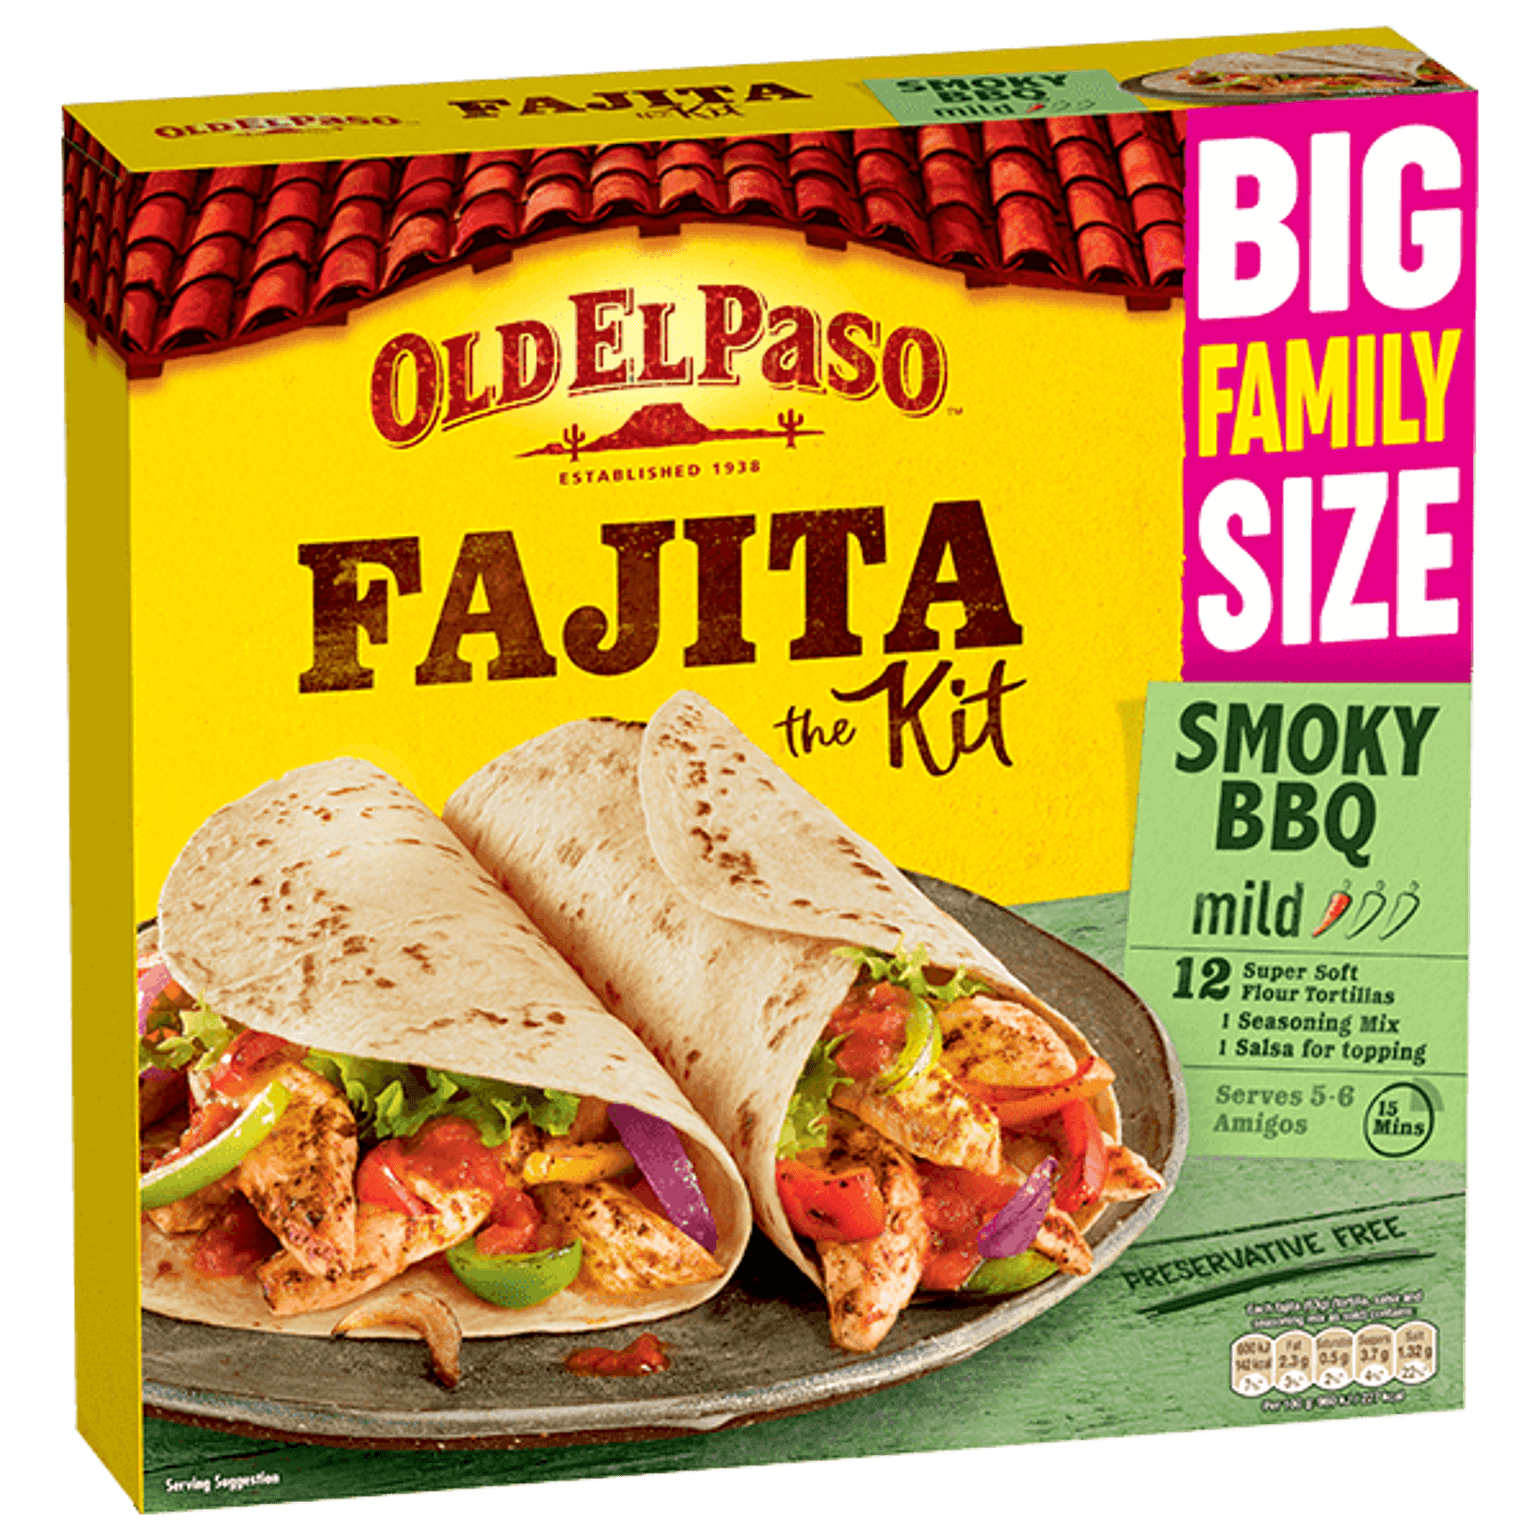 pack of Old El Paso's big family size mild smoky bbq fajita kit containing 12 soft tortillas, seasoning mix & salsa (750g)